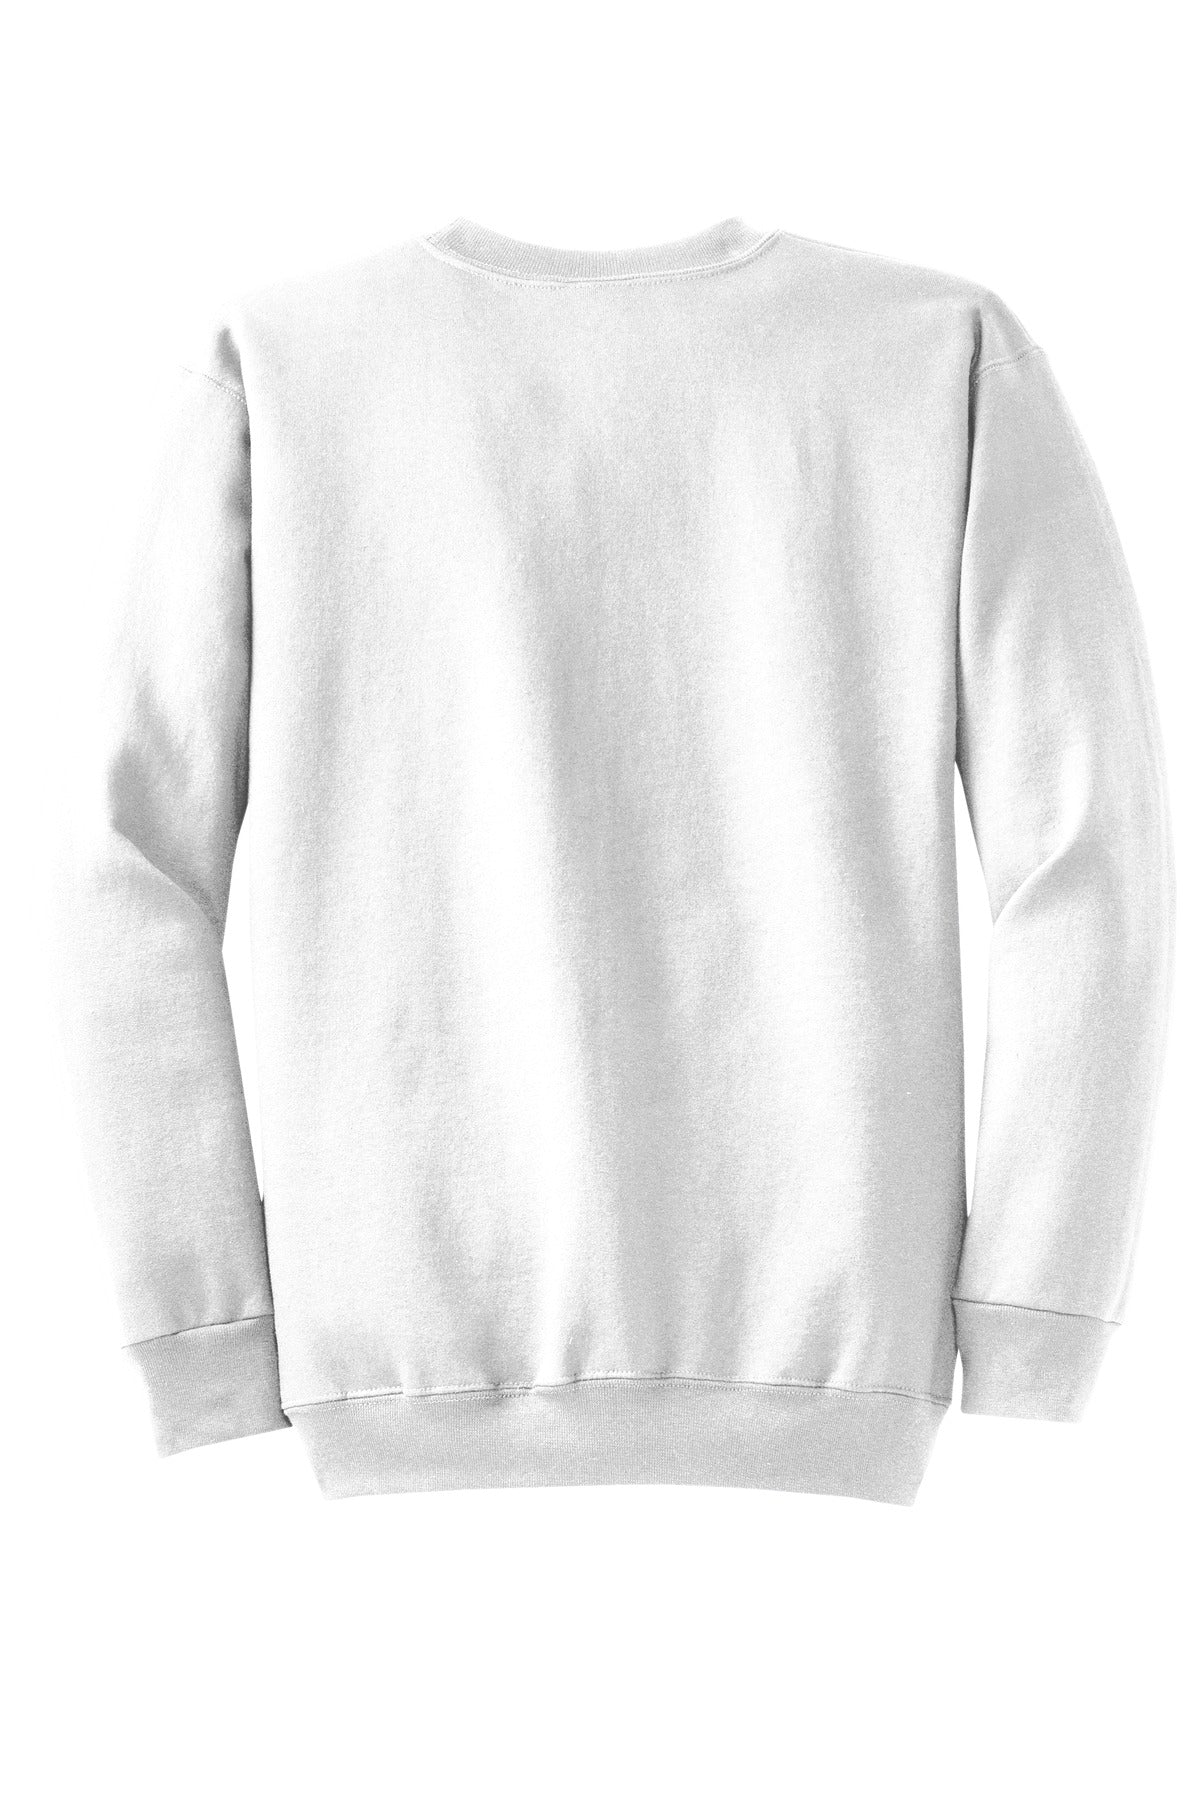 Port & Company - Core Fleece Crewneck Sweatshirt. PC78